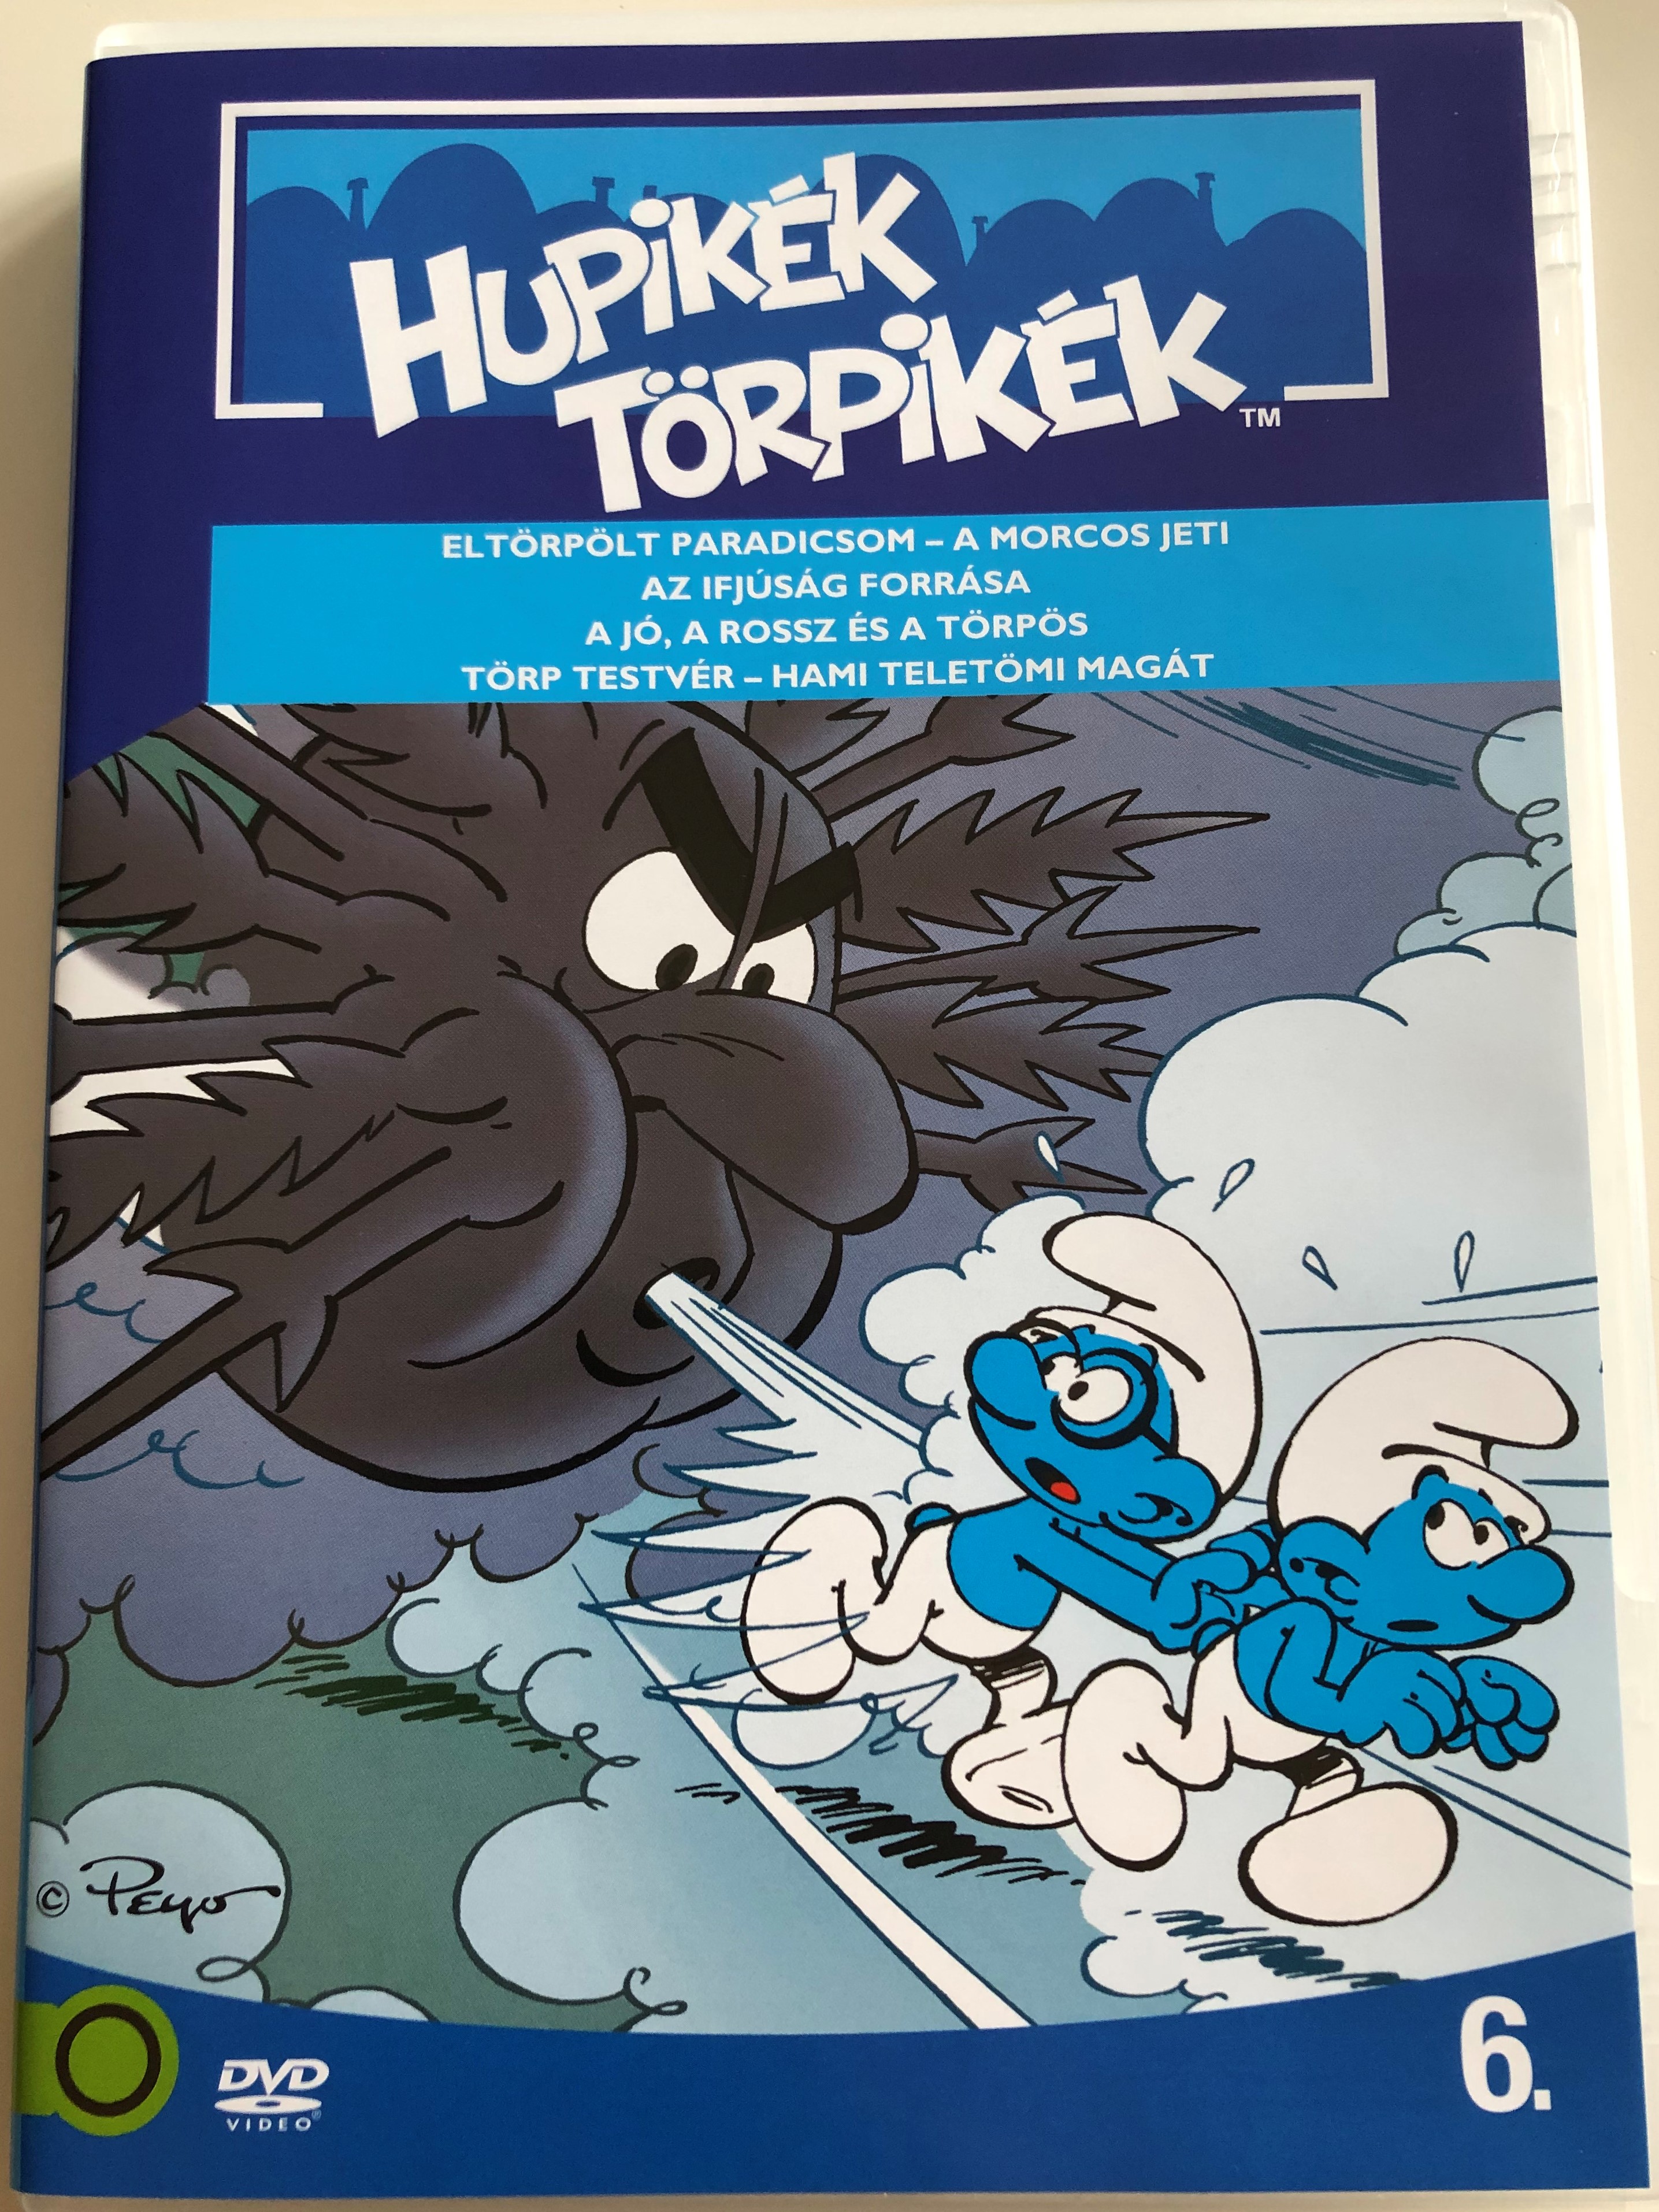 the-smurfs-1981-dvd-6.-hupik-k-t-rpik-k-directed-by-jos-dutillieu-george-gordon-elt-rp-lt-paradicsom-az-ifj-s-g-forr-sa-a-j-a-rossz-s-a-t-rp-s-t-rp-testv-r-hanna-barbera-4-episodes-on-disc-1-.jpg